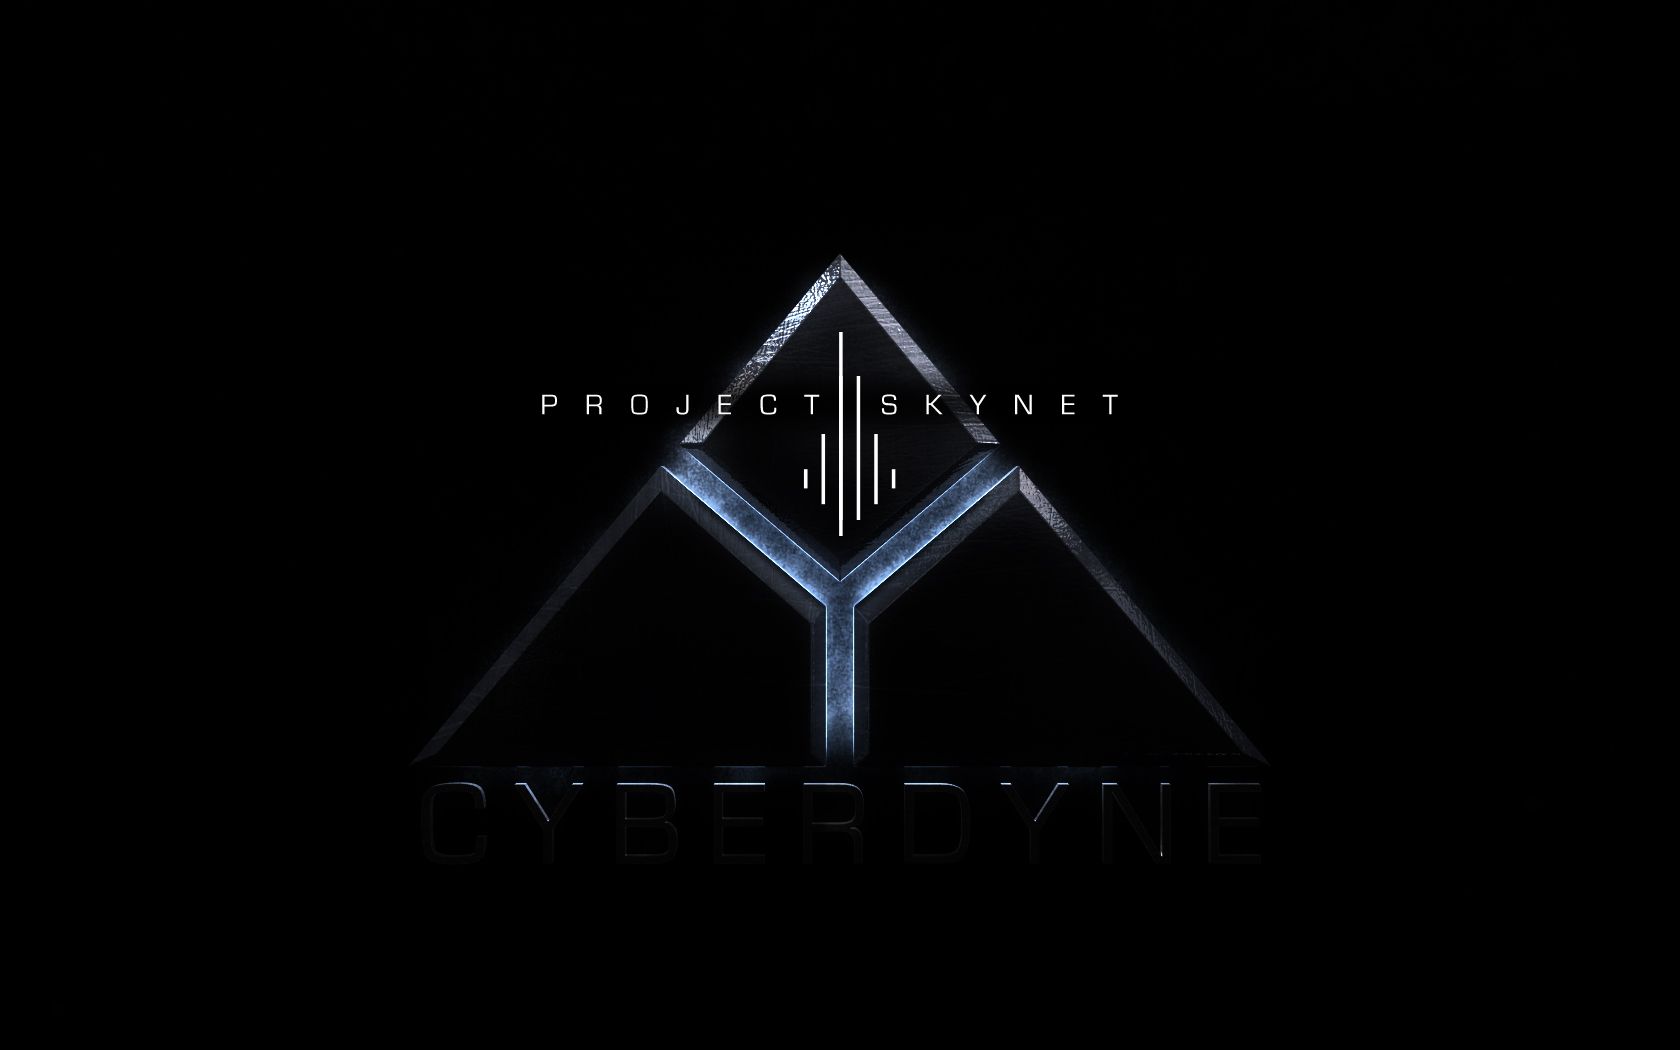 Cyberdyne Wallpaper. Cyberdyne Wallpaper